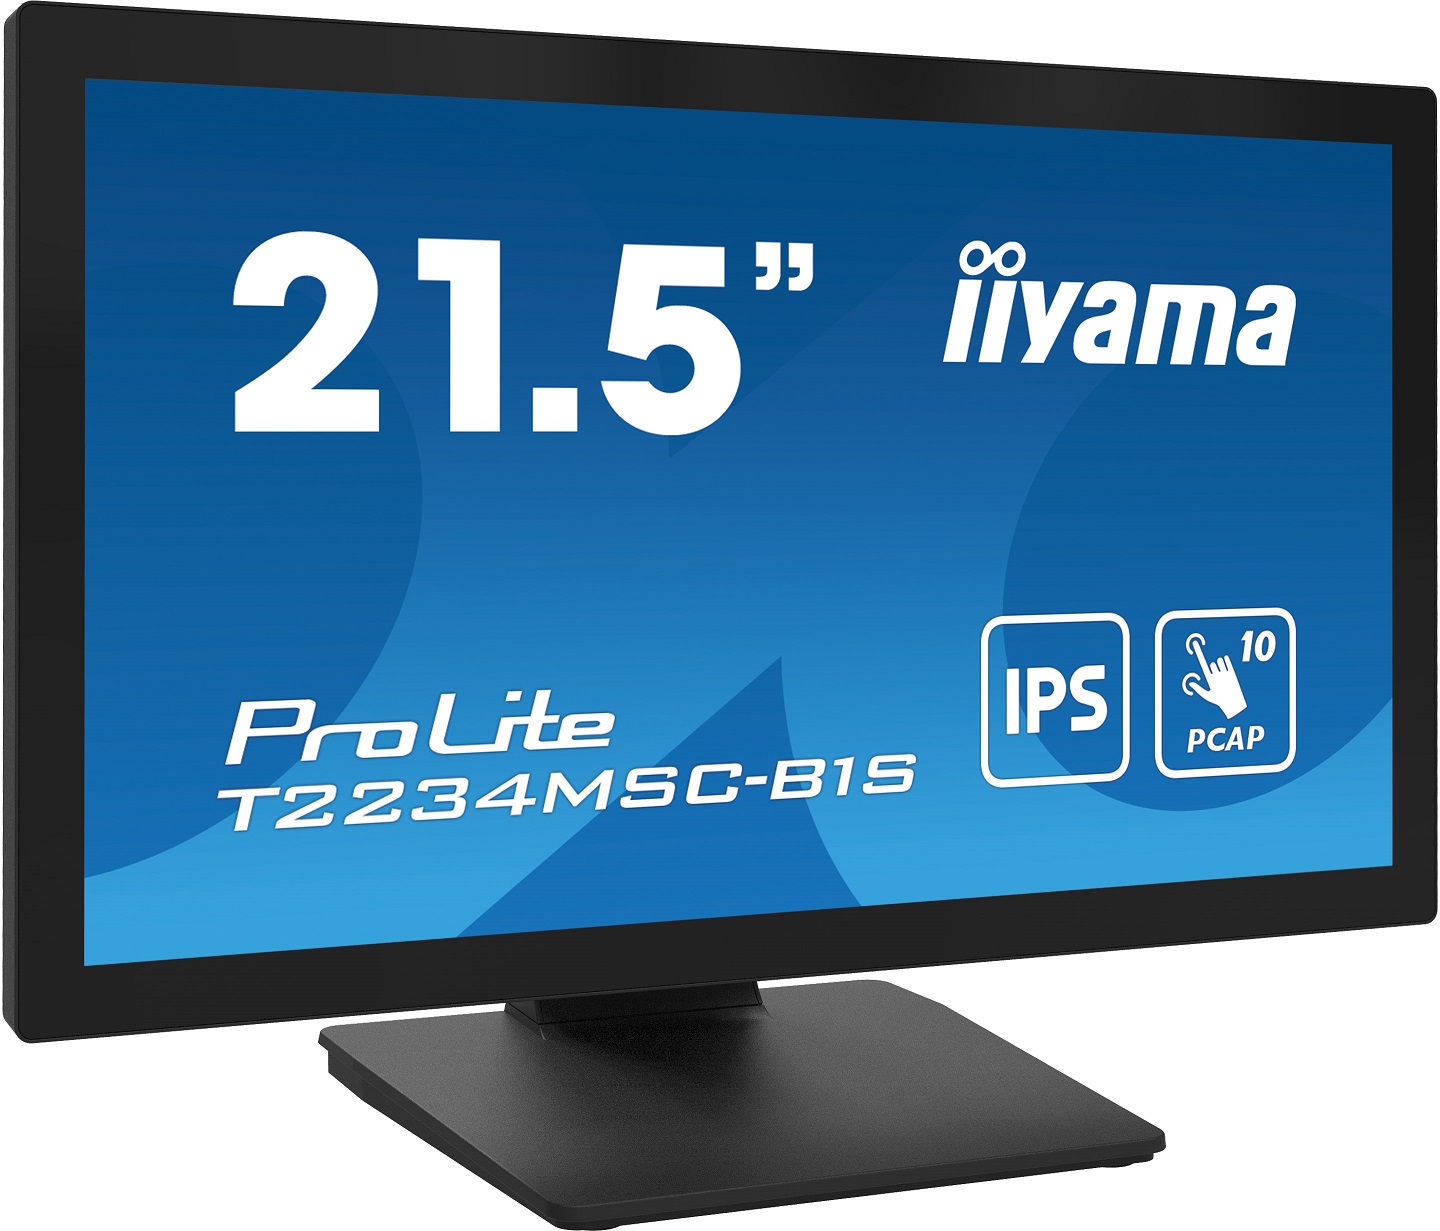 22" LCD iiyama T2234MSC-B1S: PCAP, 10P, IPS, FHD, HDMI 